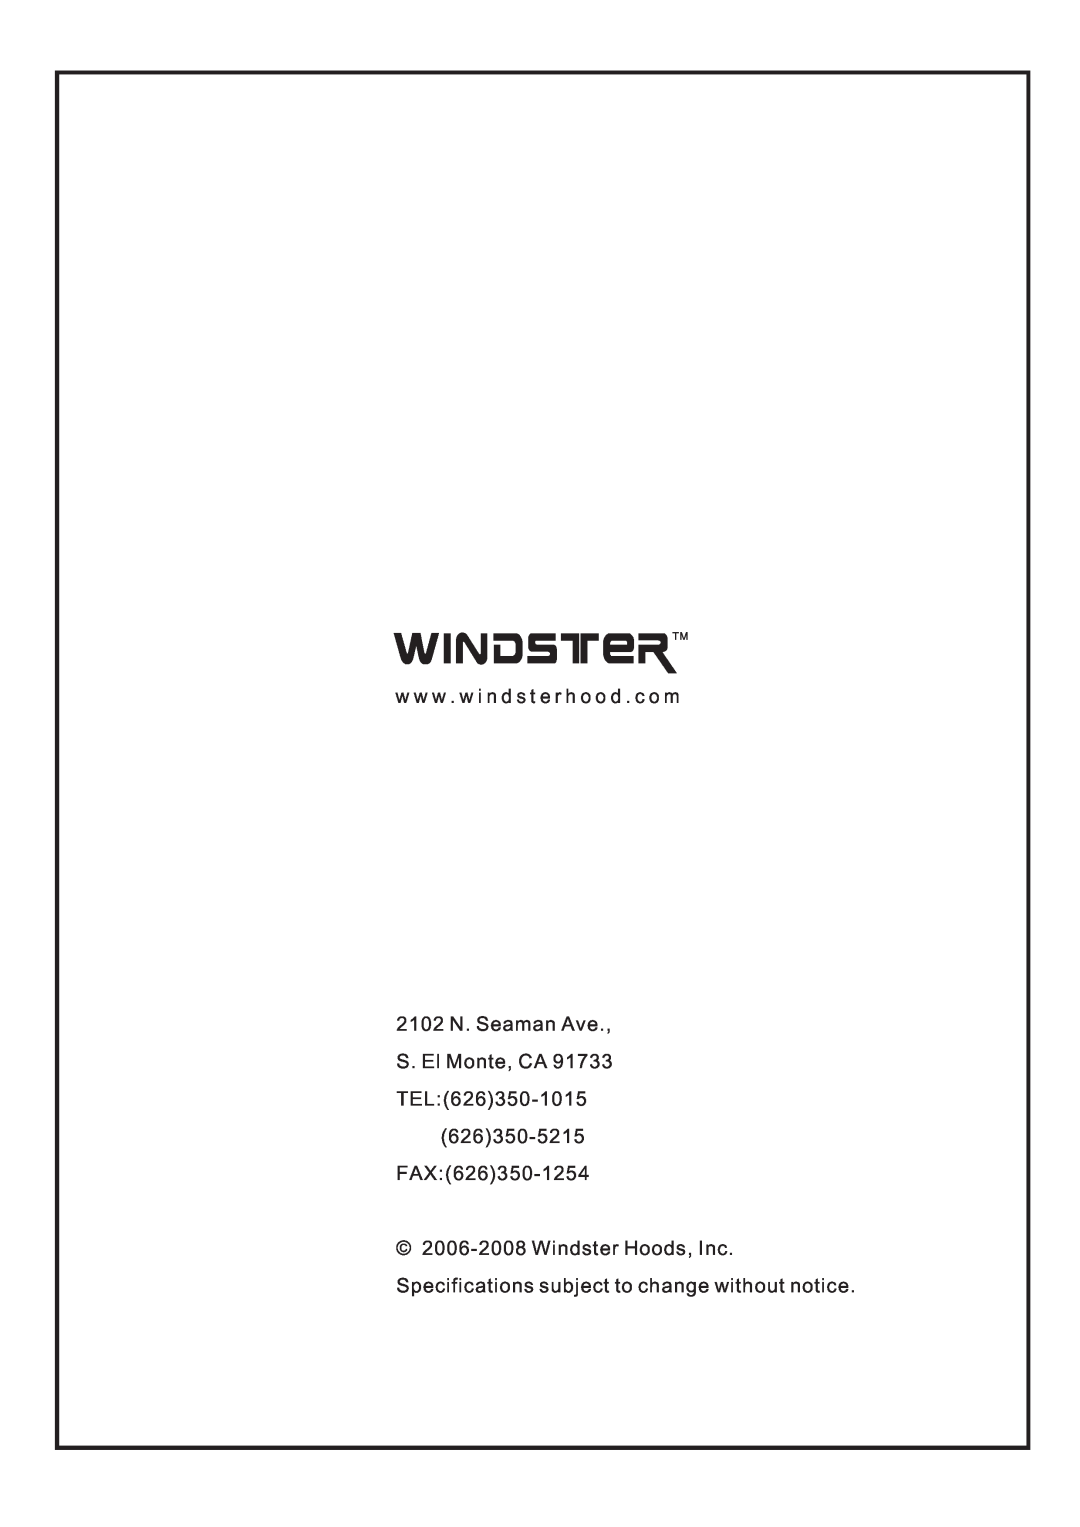 Windster WS-55 SERIES manual Windster Tm, w w w . w i n d s t e r h o o d . c o m, 626350-5215 FAX626350-1254 